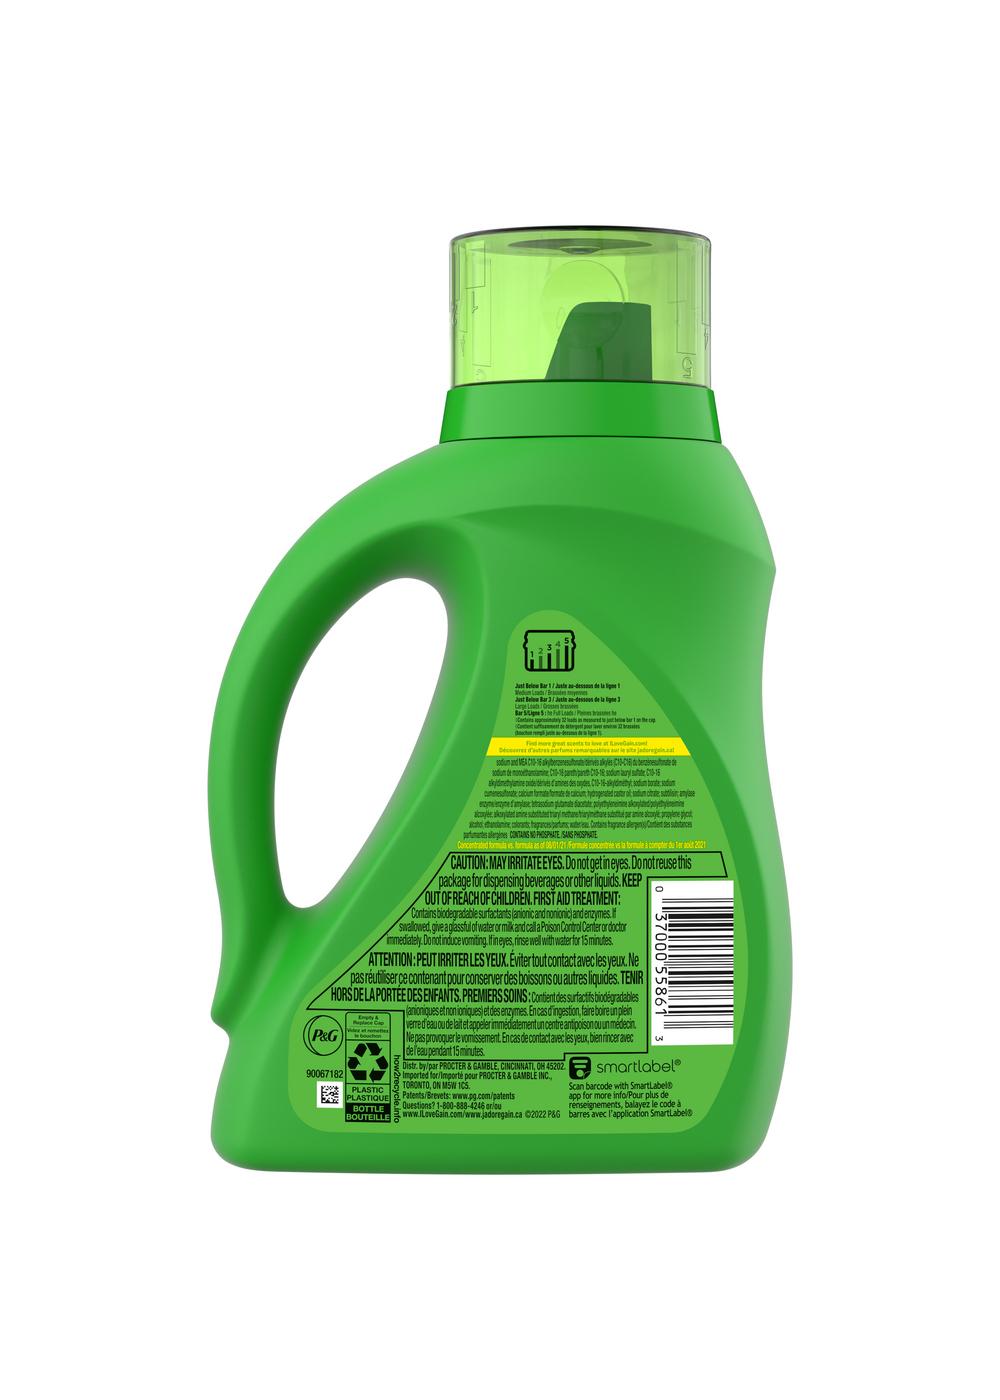 Gain + Aroma Boost HE Liquid Laundry Detergent, 32 Loads - Original; image 9 of 9